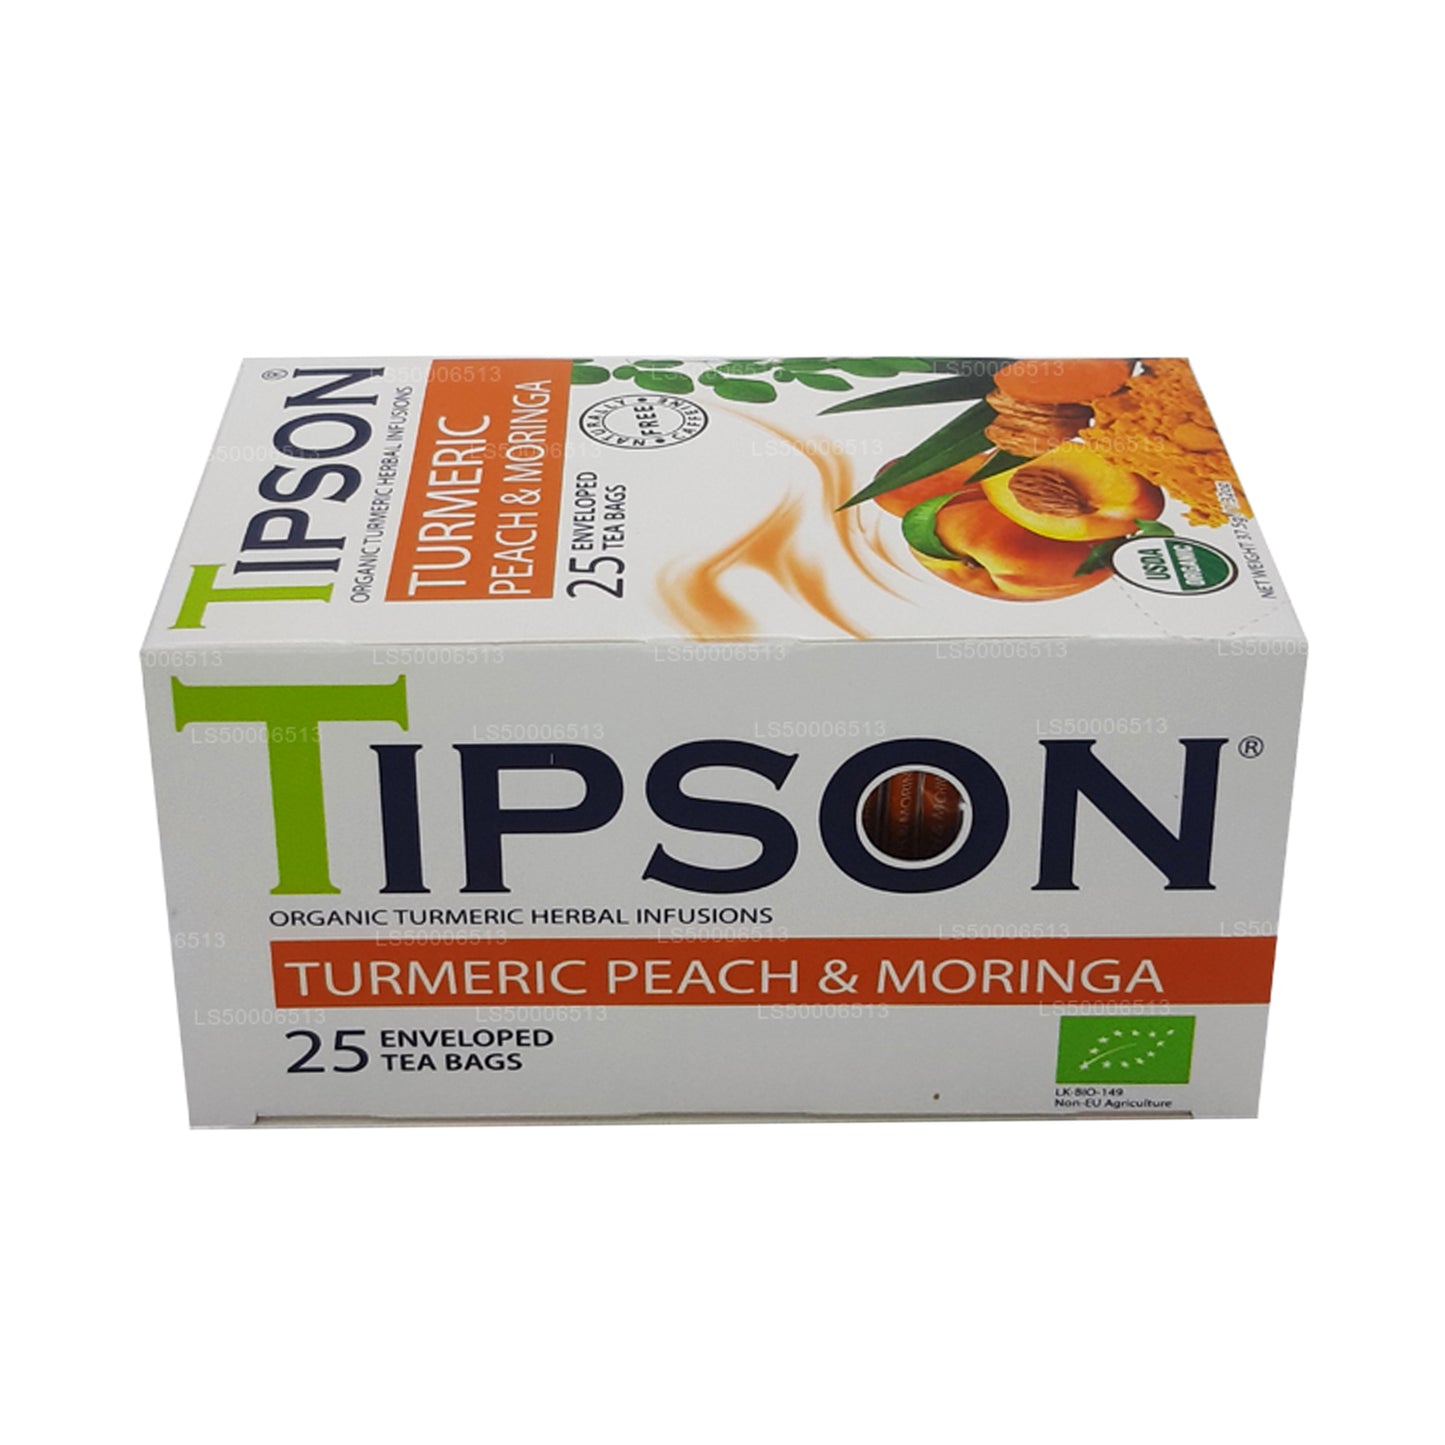 Tipson Turmeric Peach & Moringa 25 Enveloped Tea Bags (37.5g)